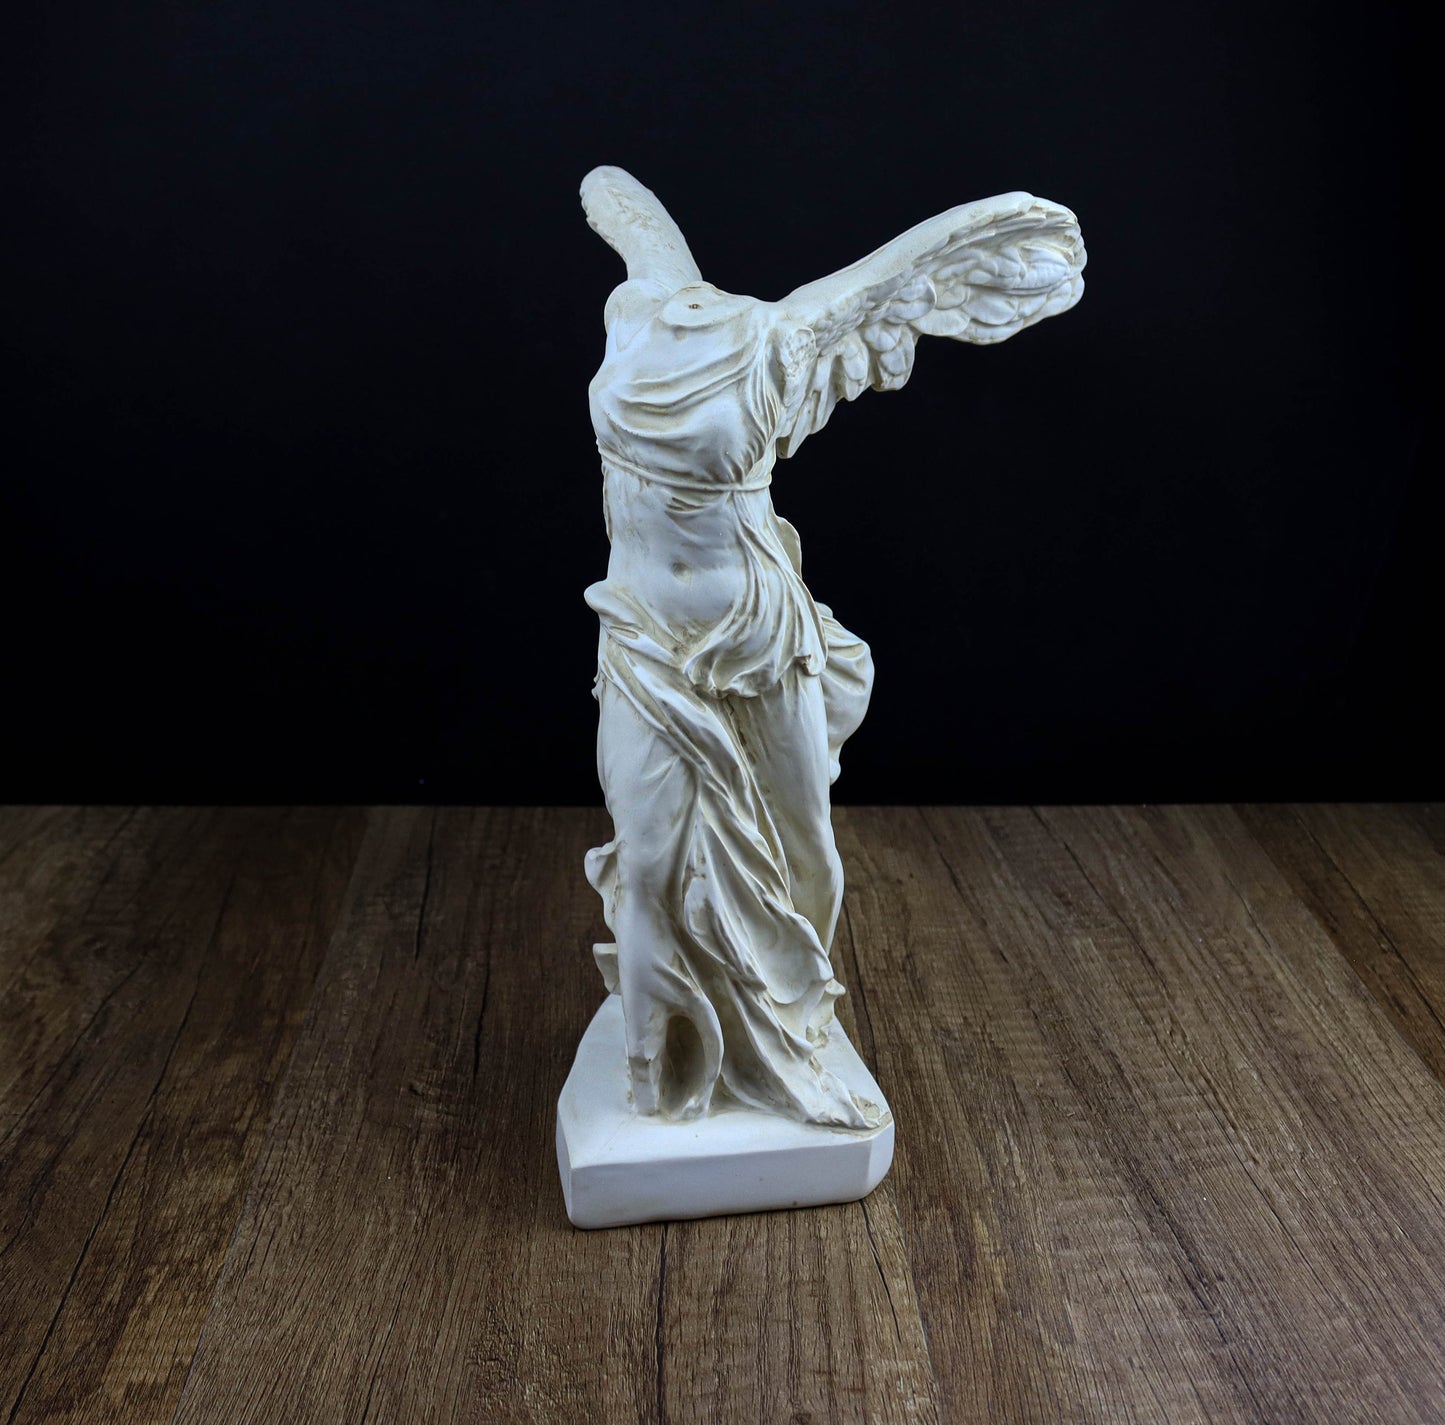 Winged Victory of Samothrace 30cm (11.8") Statue, Nike of Samothrace sculpture